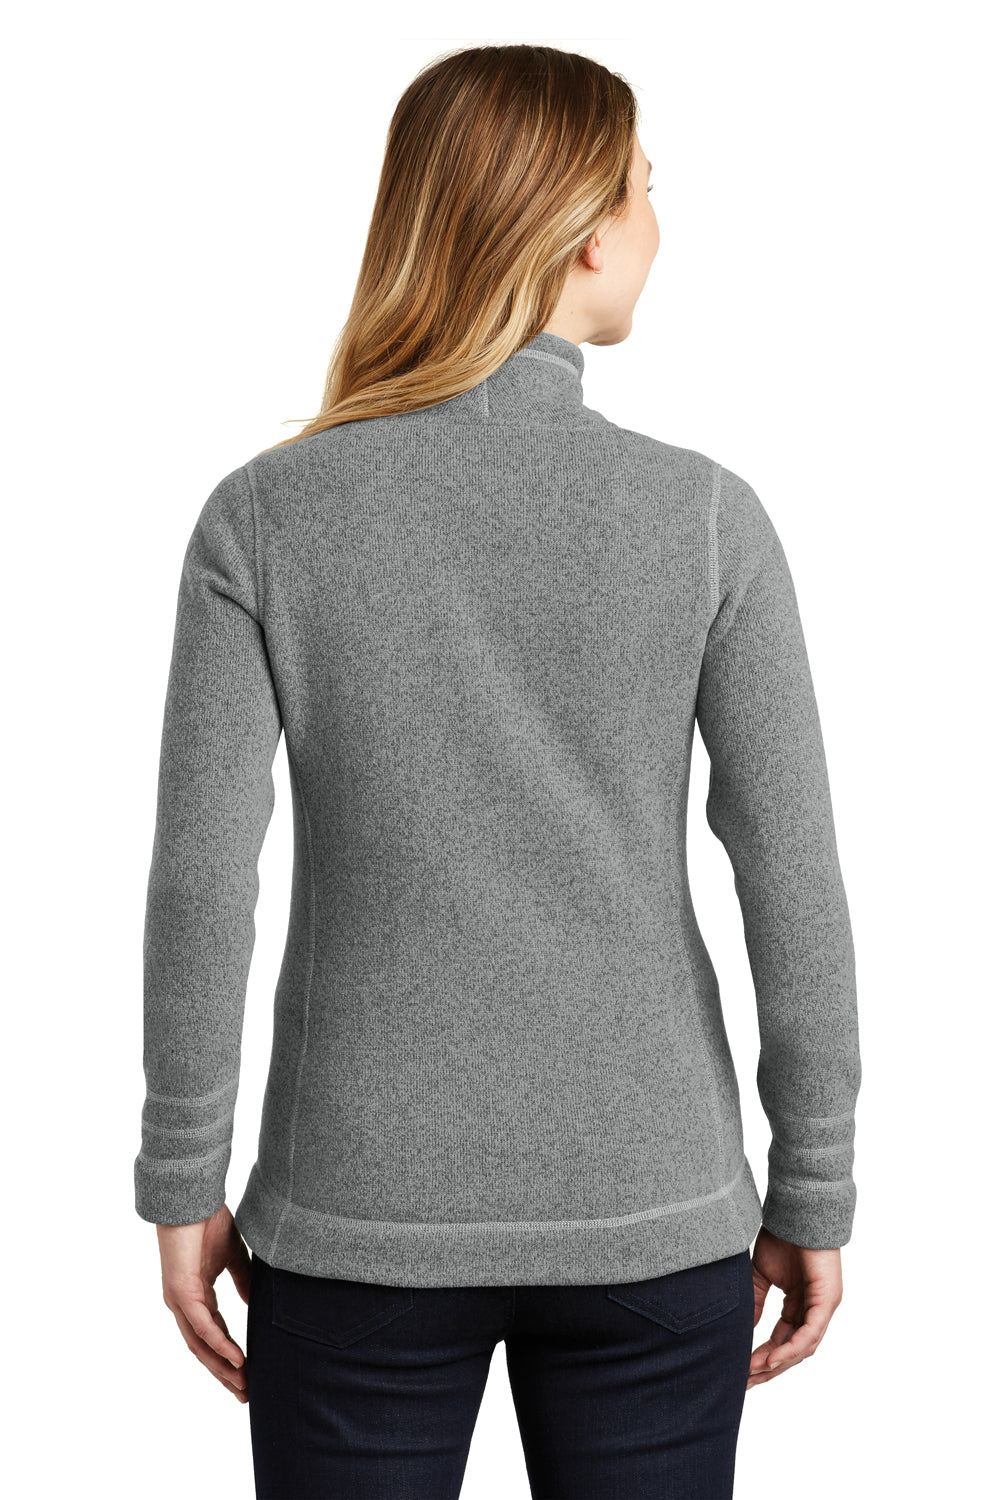 The North Face NF0A3LH8 Womens Full Zip Sweater Fleece Jacket Heather Medium Grey Back